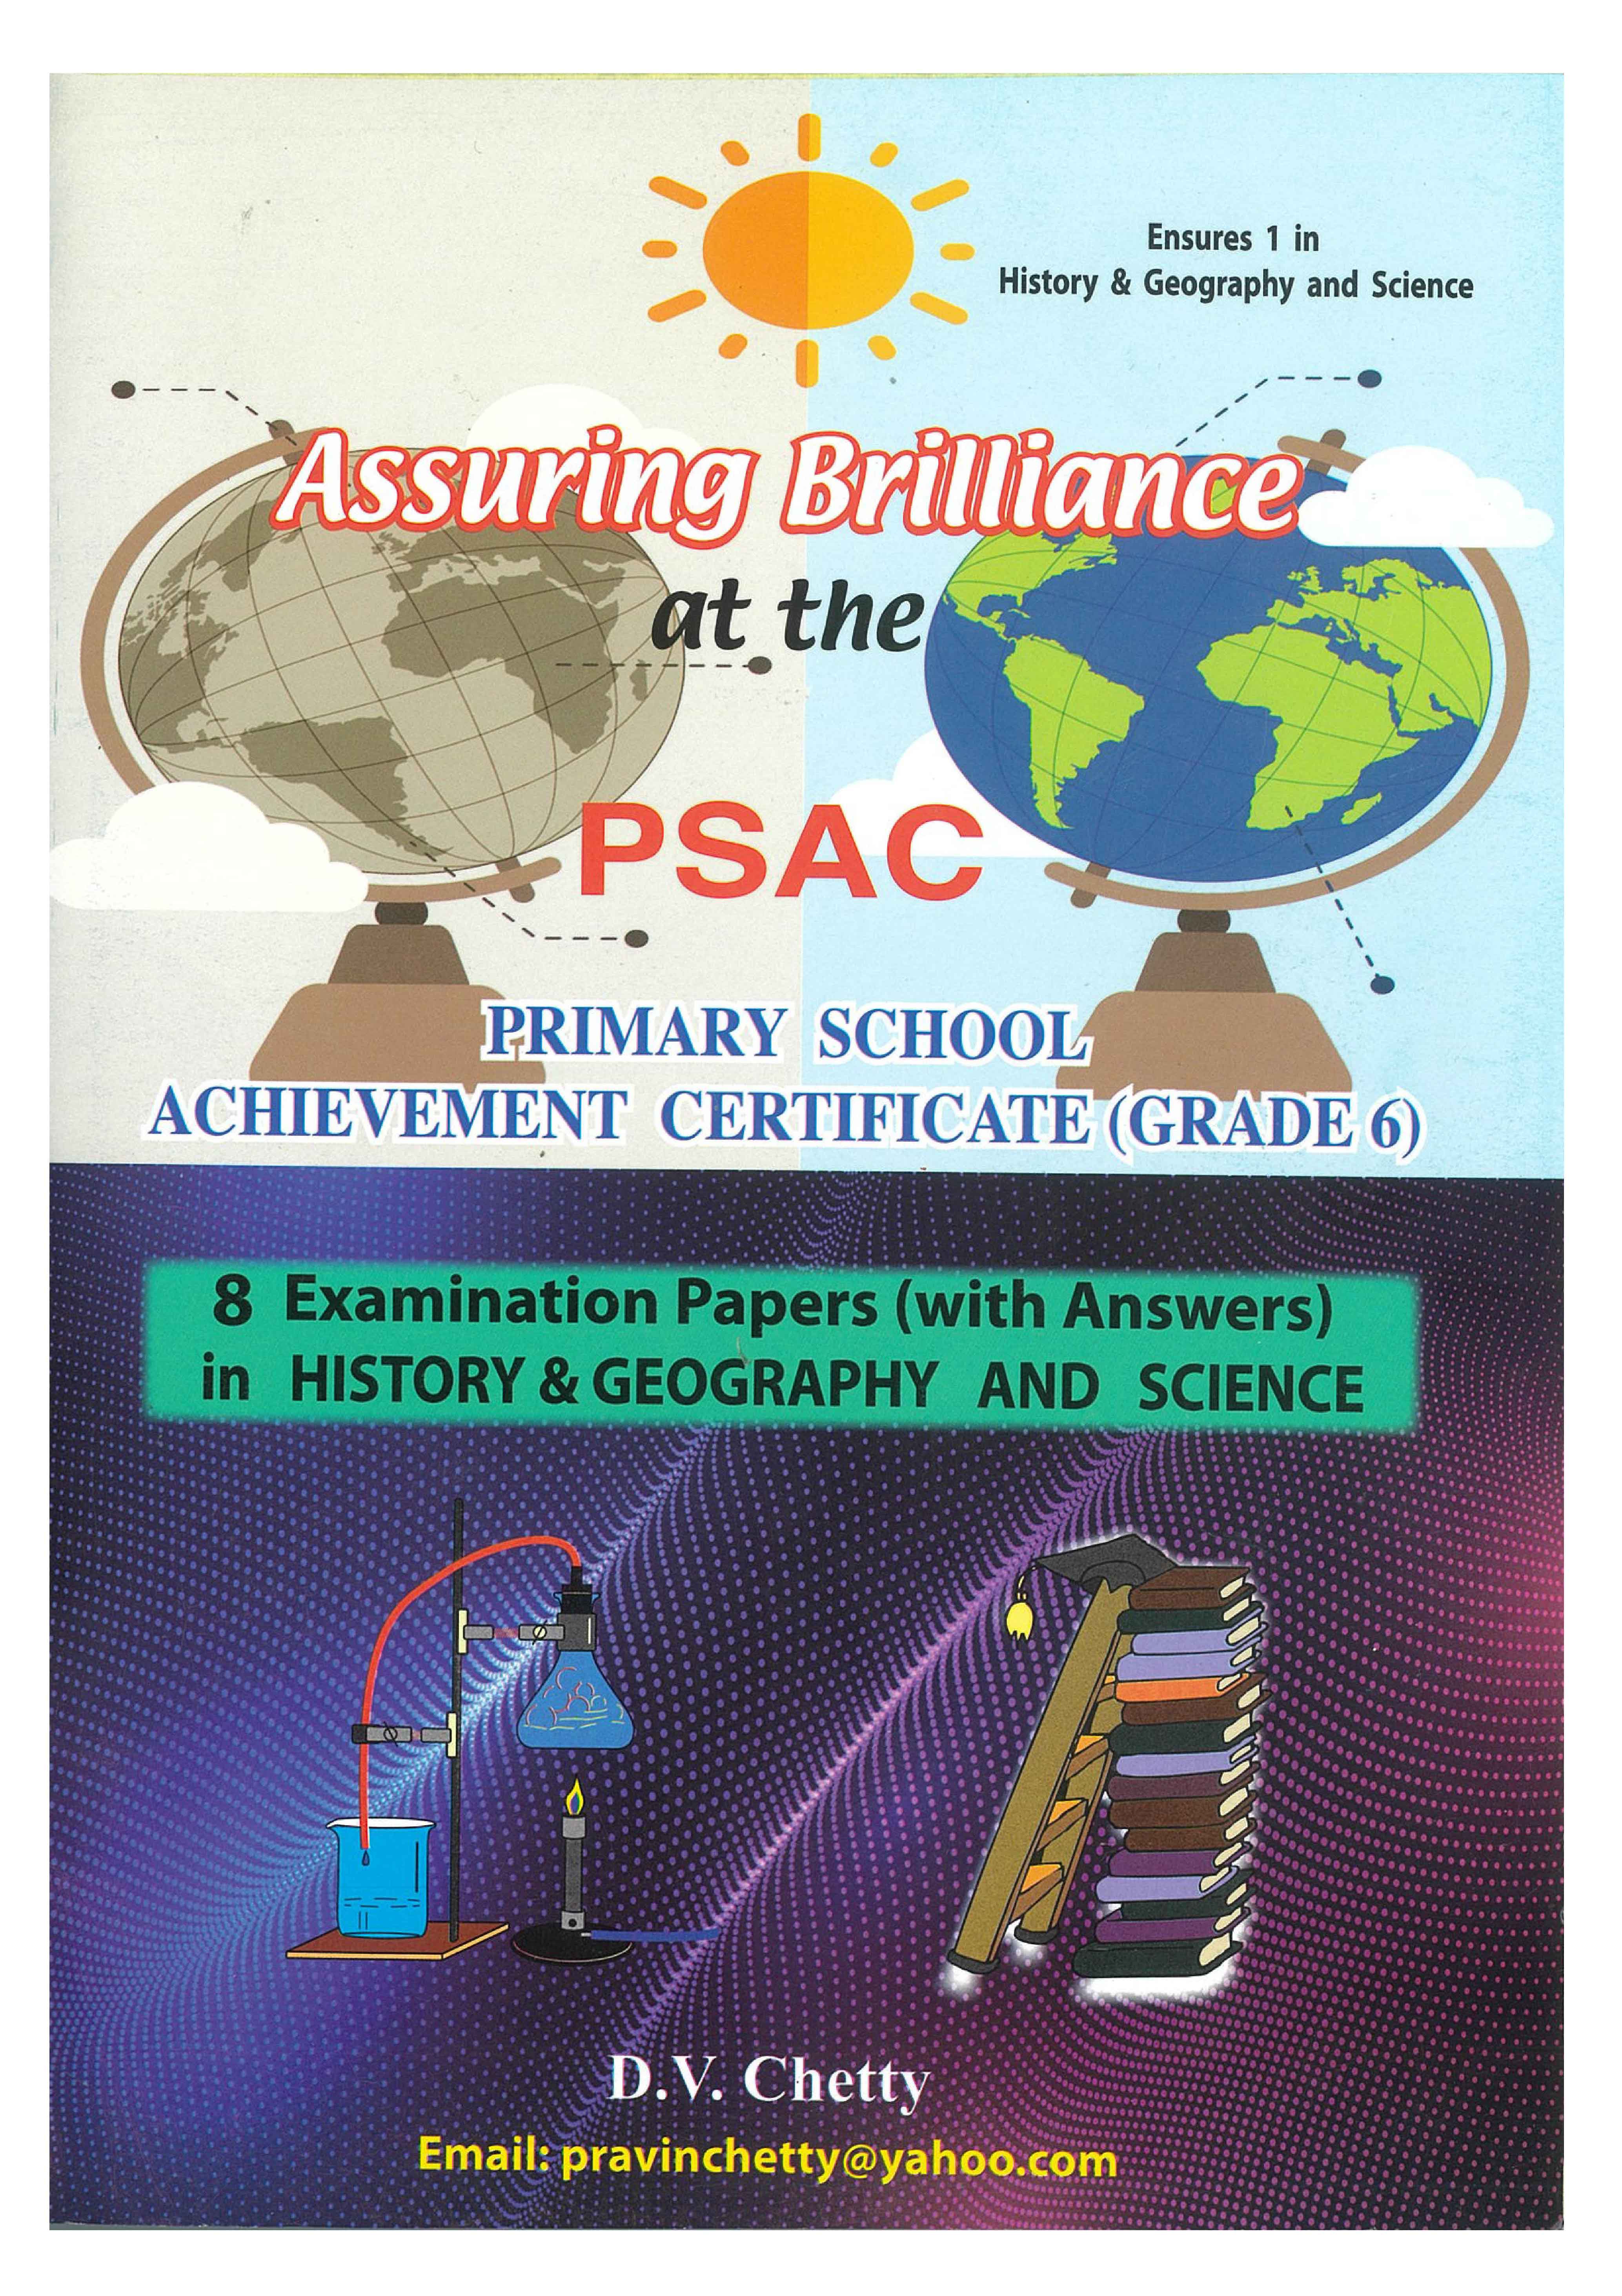 ASSURING BRILLIANCE THE PSAC HIS & GEO/SCIENCE GRADE 6 - CHETTY